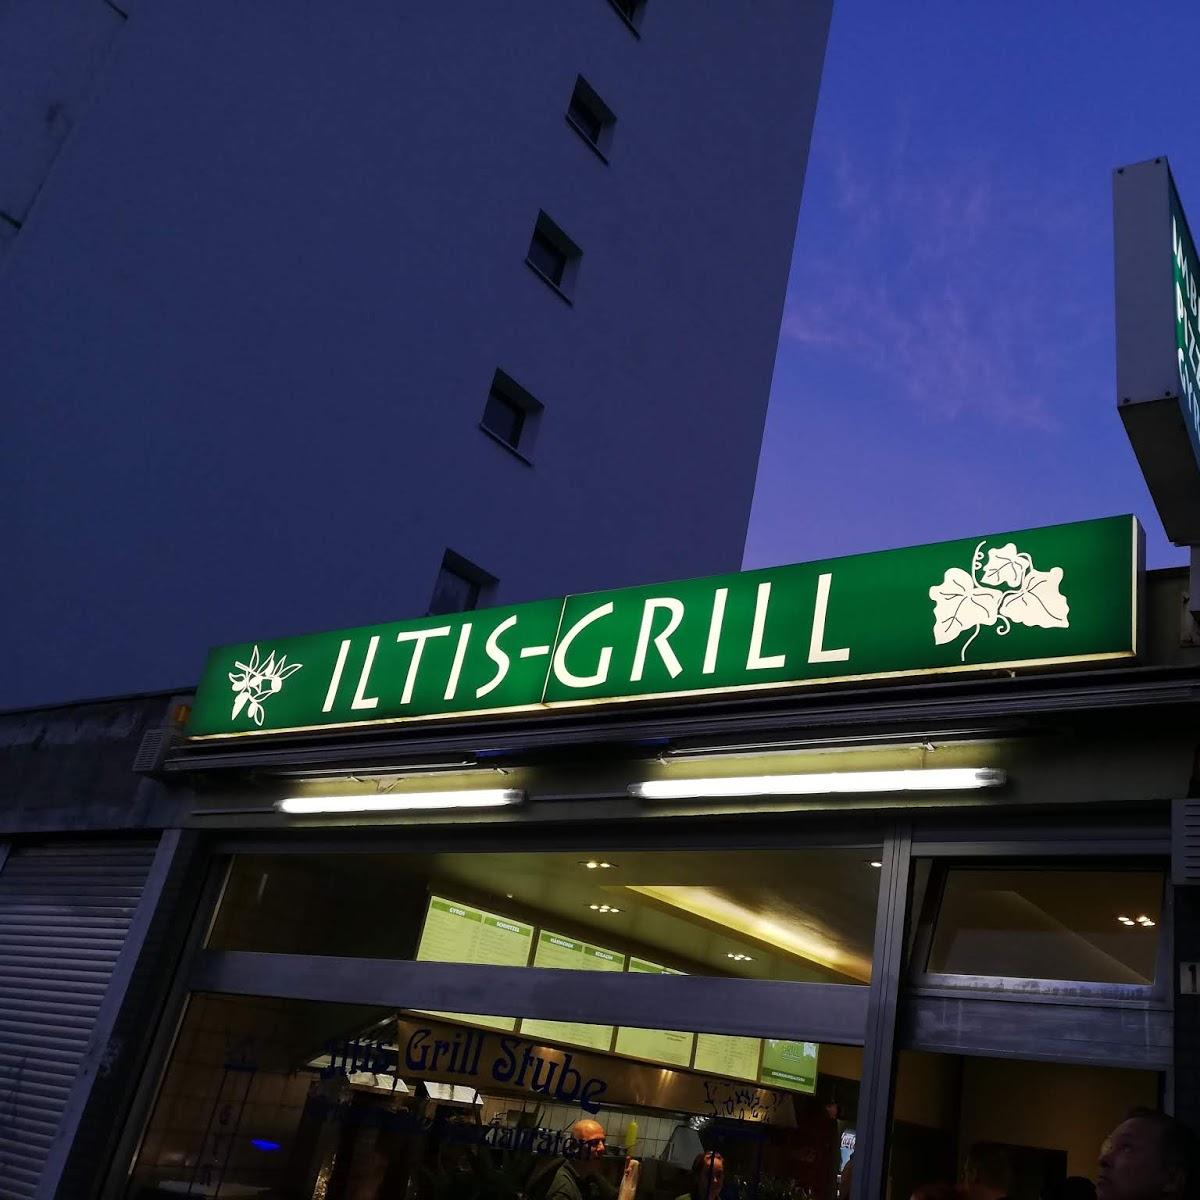 Restaurant "Iltis-Grill" in Köln